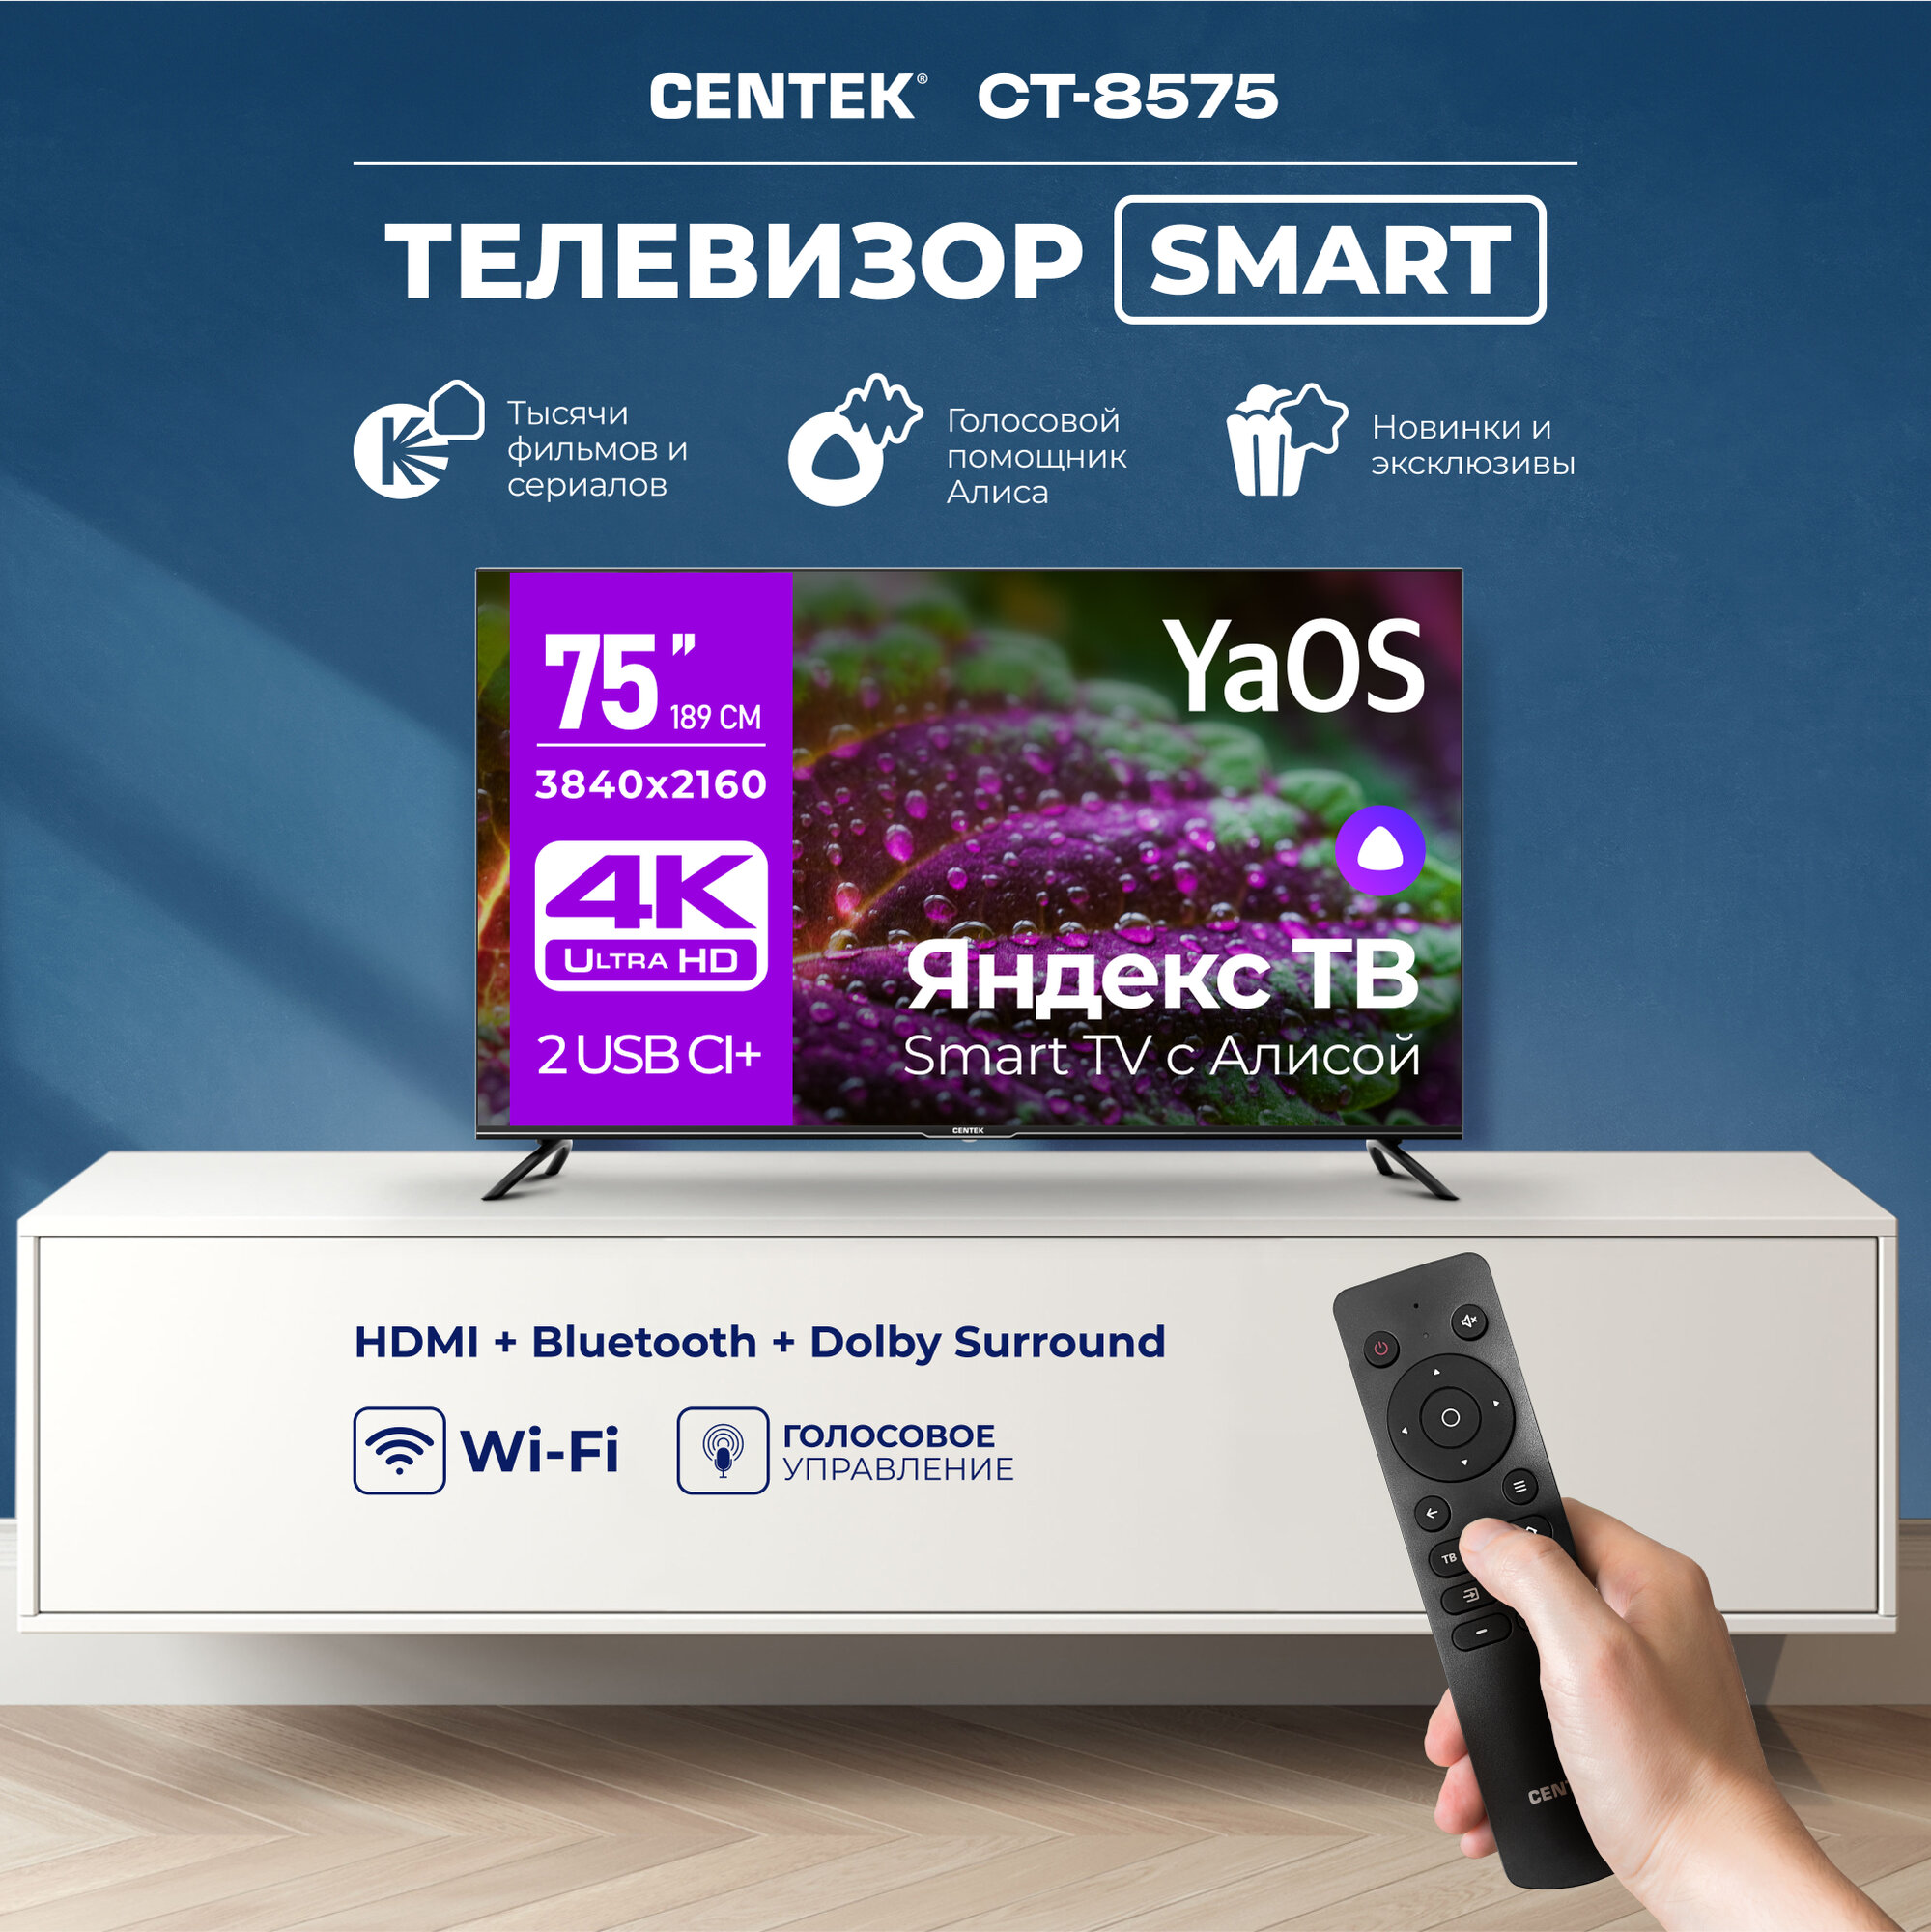 Телевизор Centek CT-8575, 75 дюймов с поддержкой 4К Ultra HD, Wi-Fi и Bluetooth, Яндекс YaOS